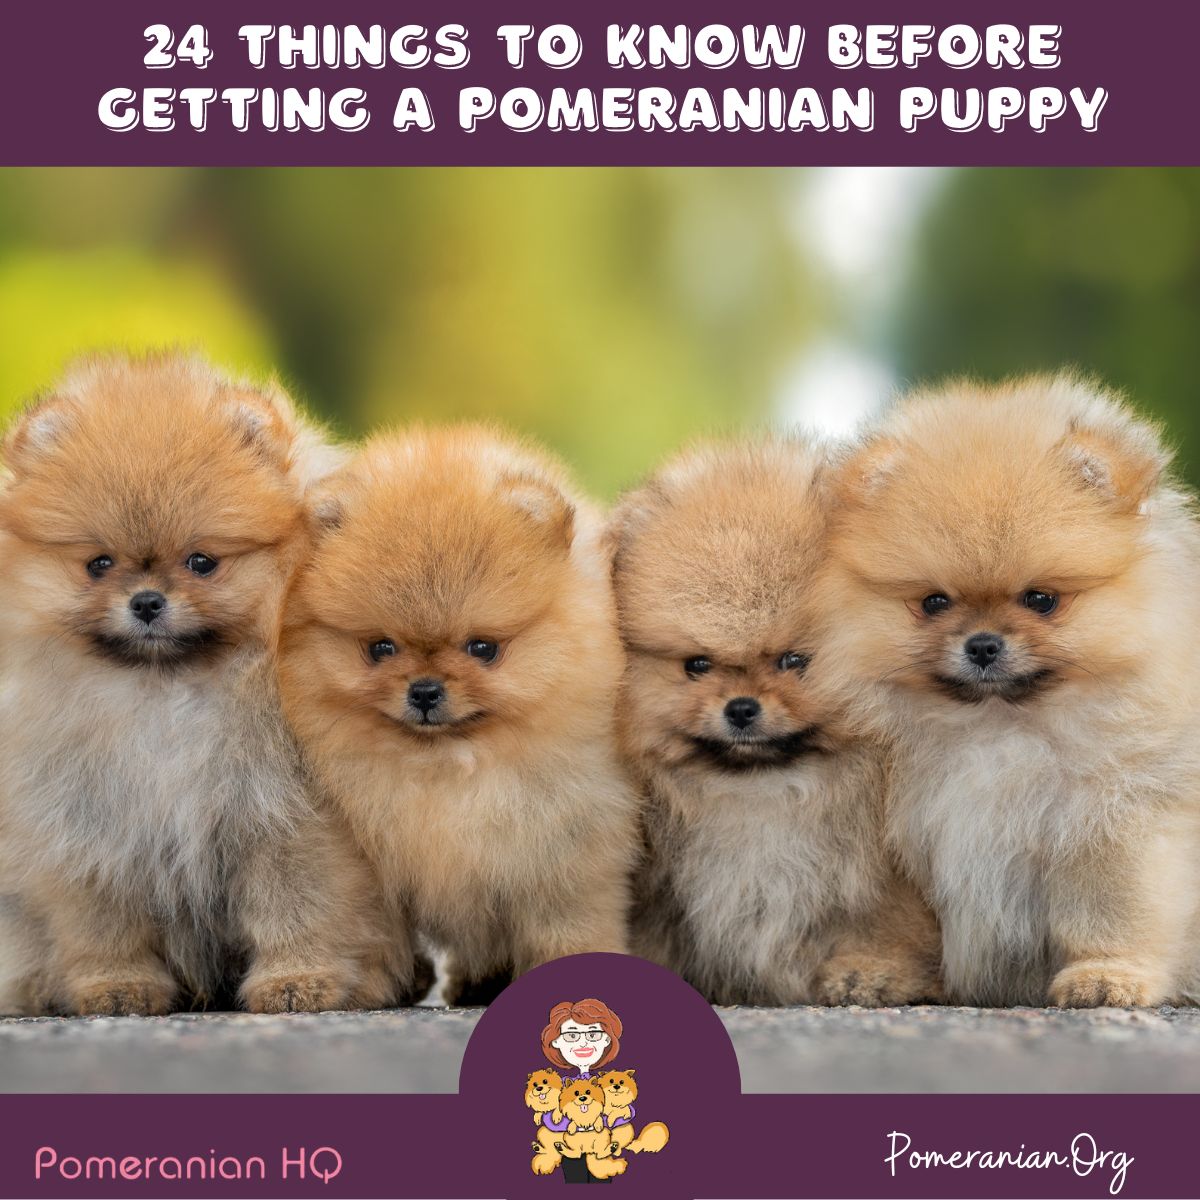 Pomeranian pros and cons